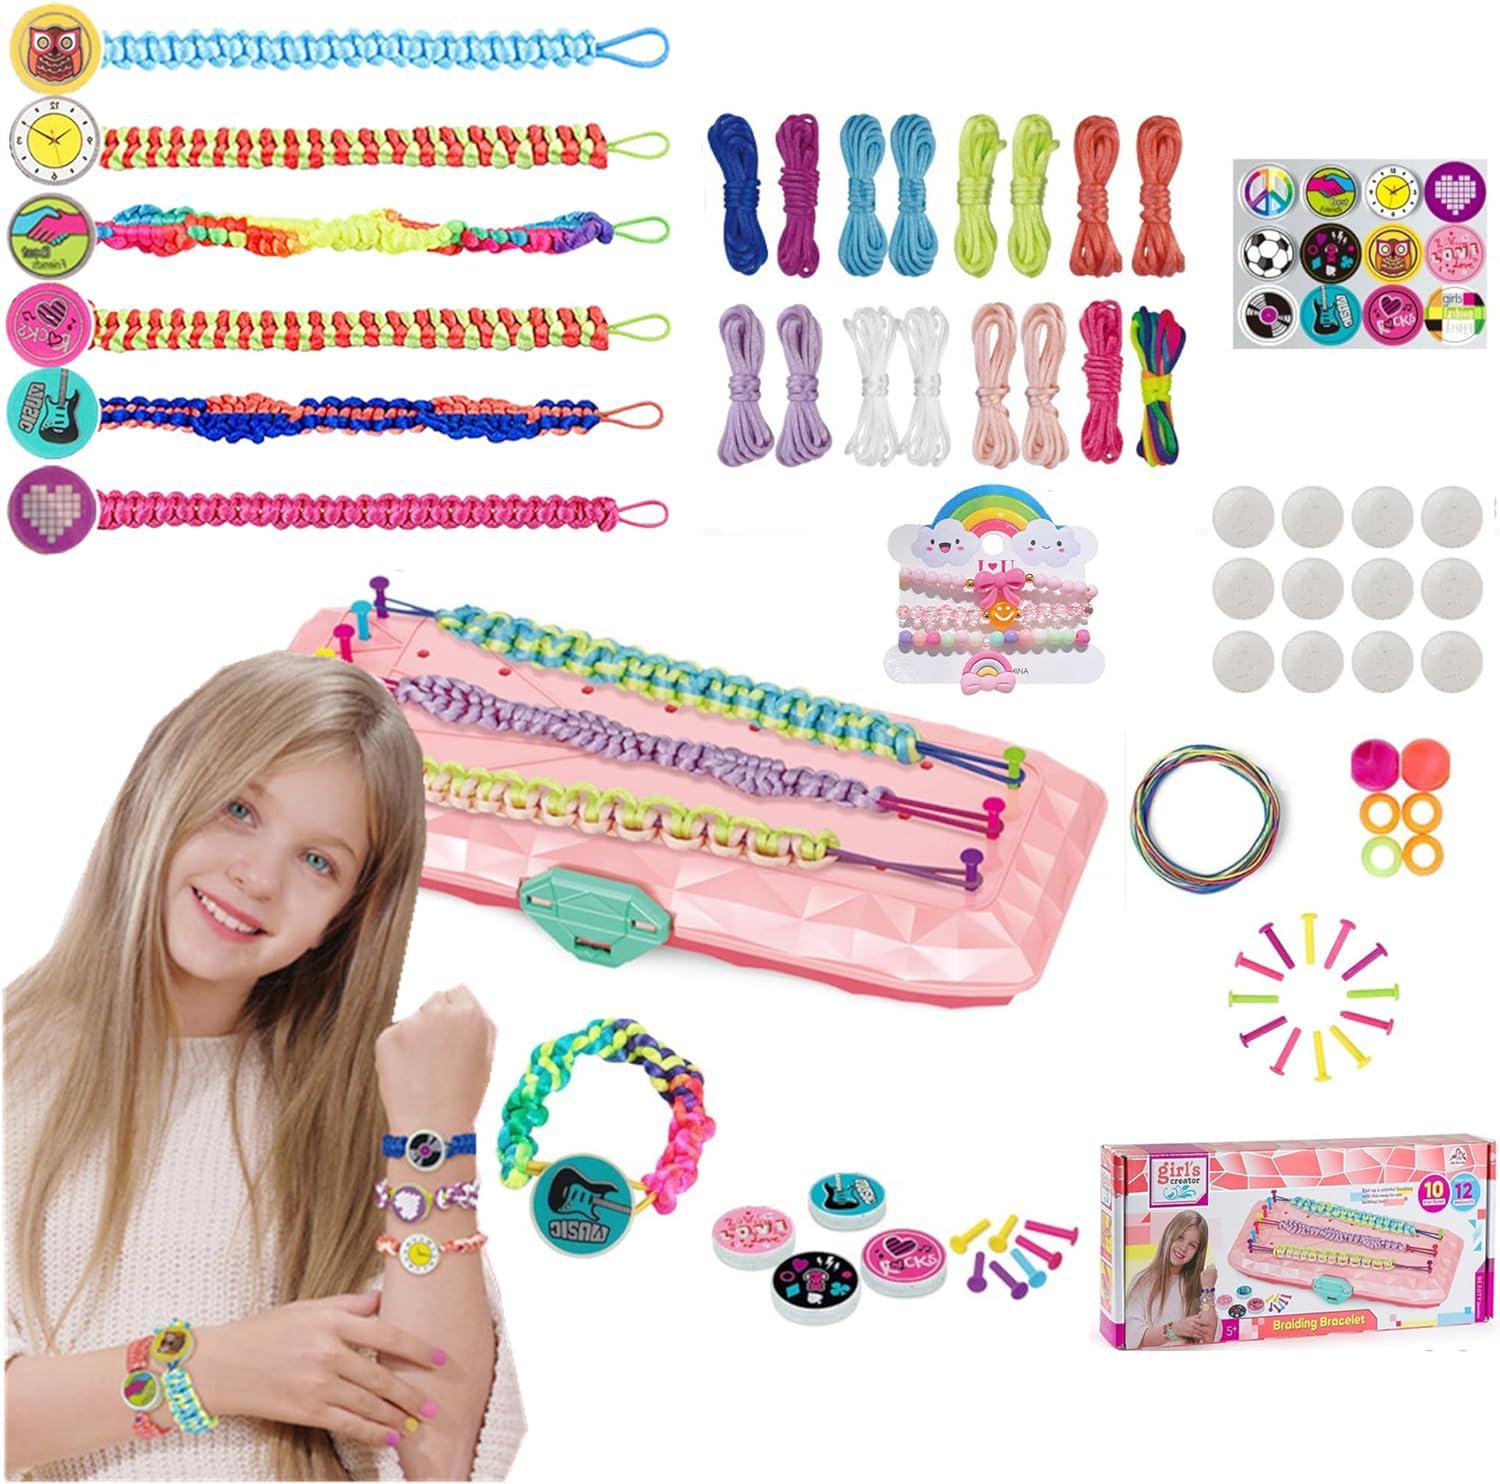  UFU Charm Bracelet Making Kit - Girls 120 Pcs DIY